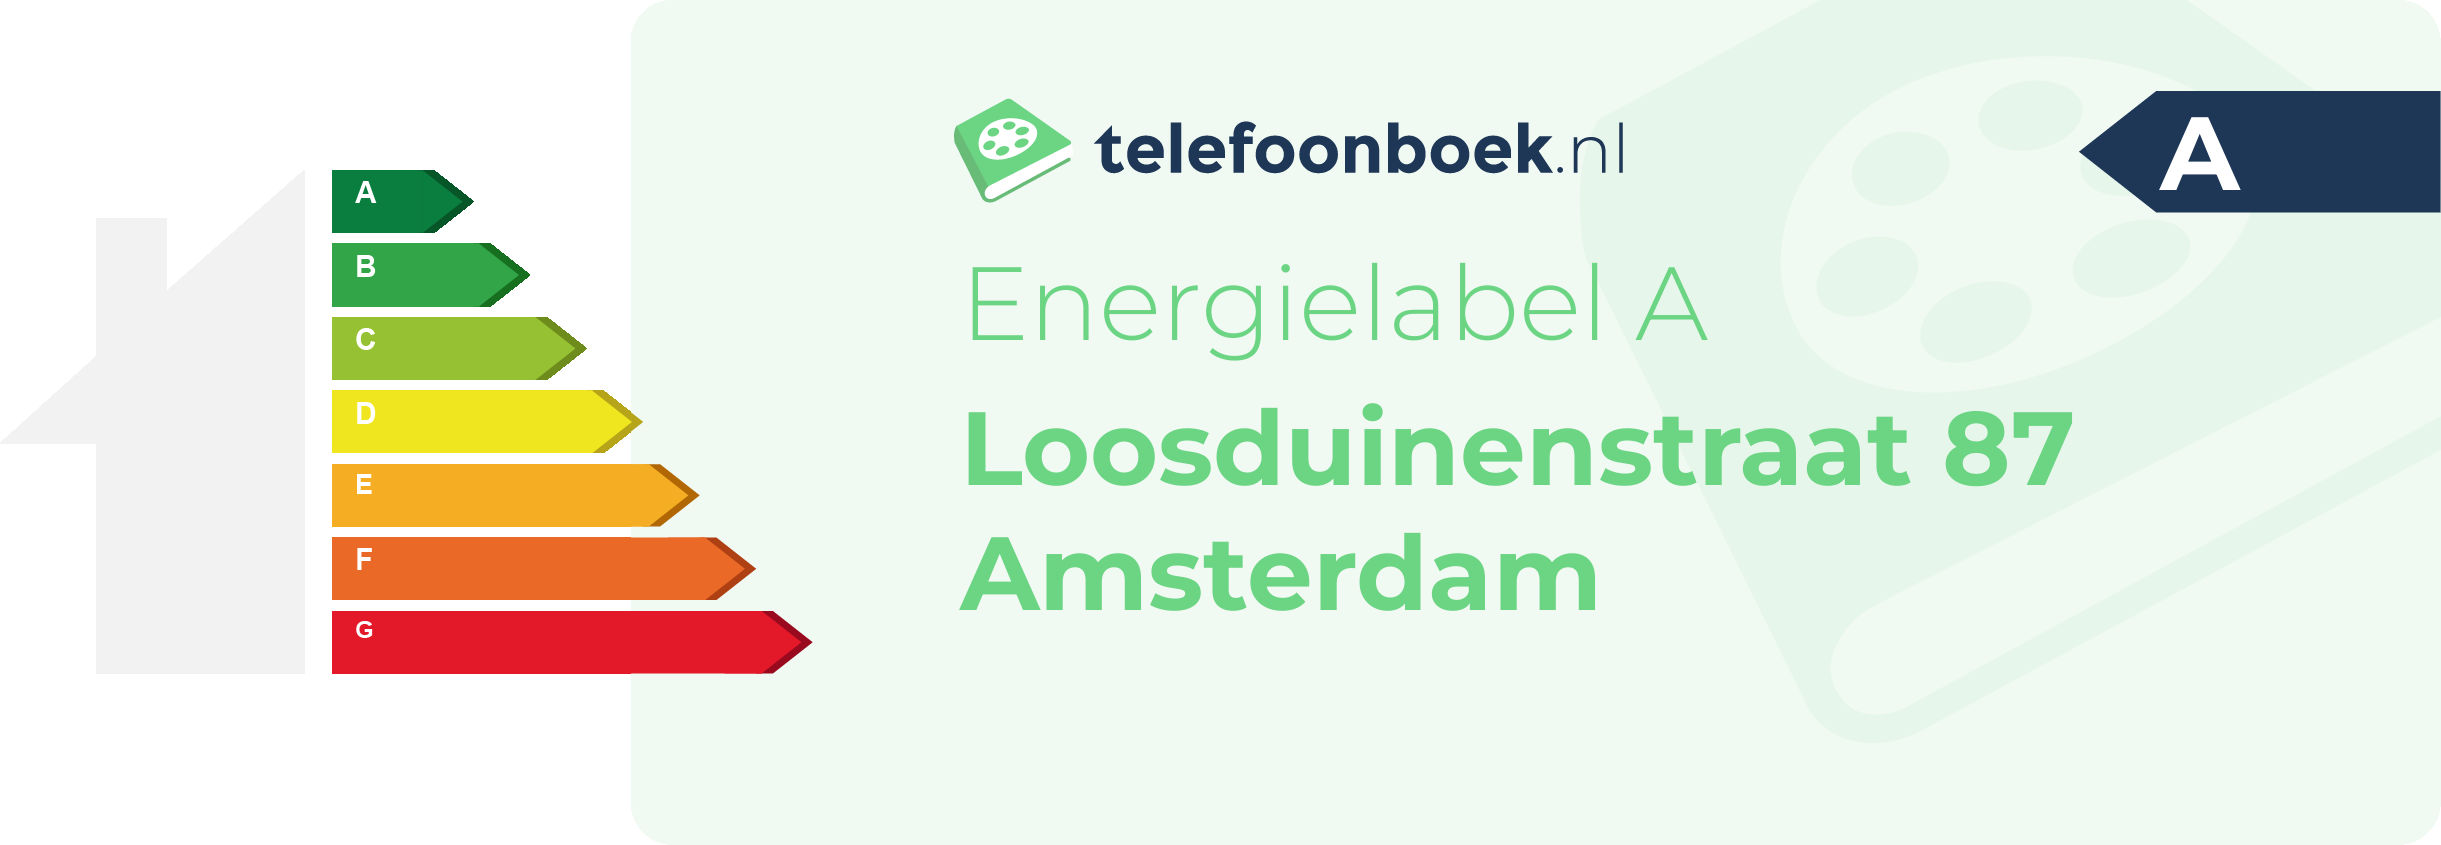 Energielabel Loosduinenstraat 87 Amsterdam